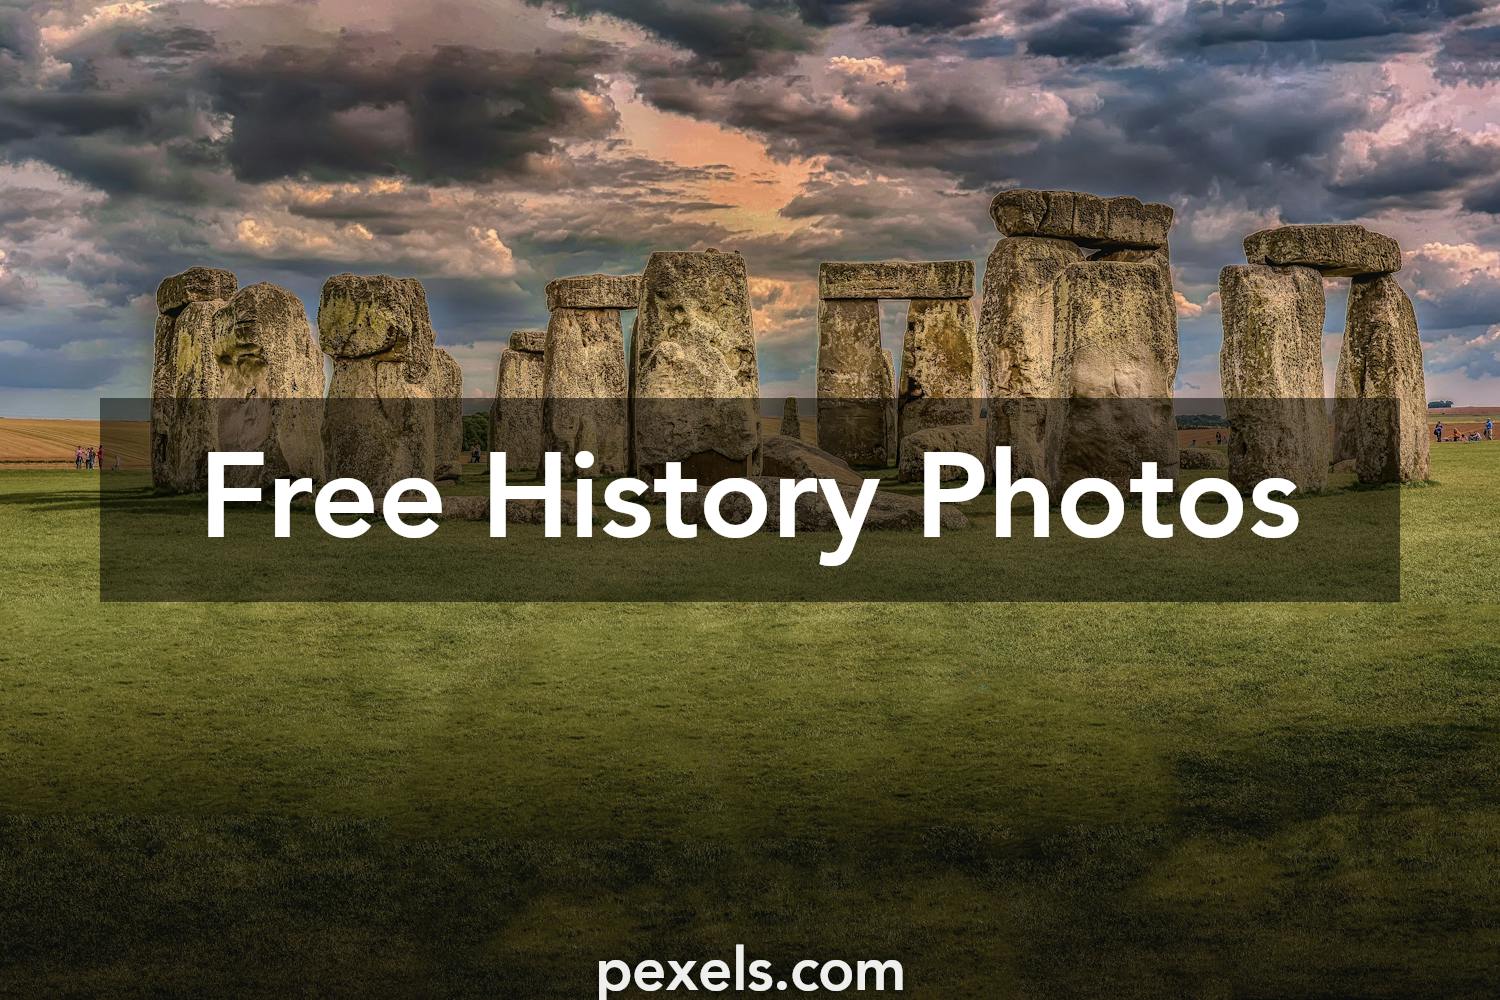 Free stock photos of history · Pexels